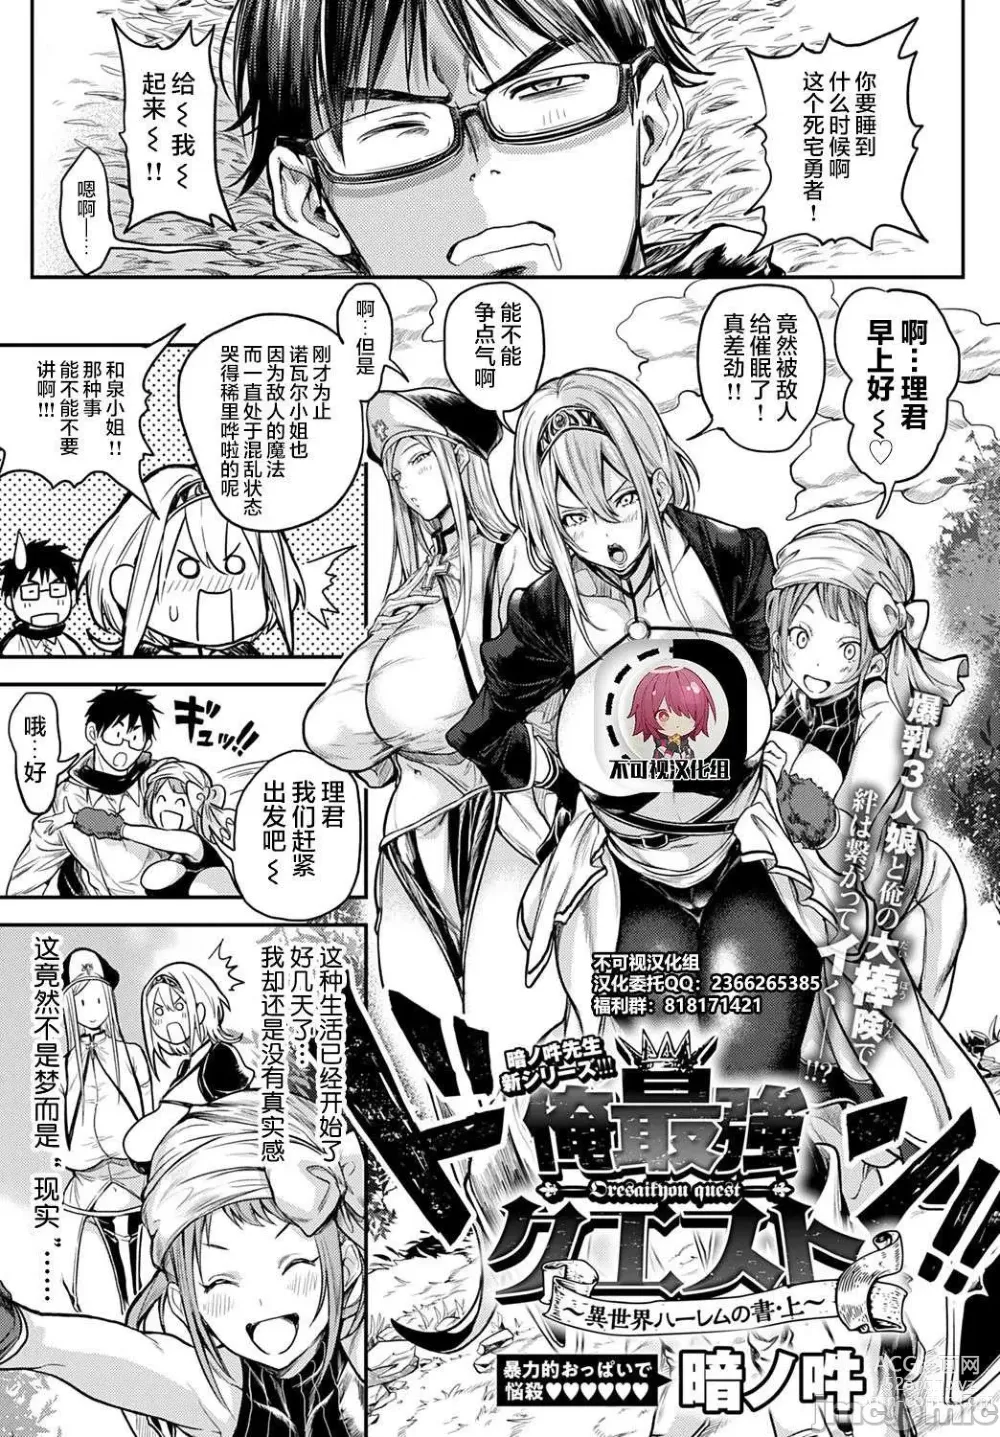 Page 7 of manga Harem  Quest Ore to Bijo to Oppai to Isekai 才 Nikuyoku Seikatsu